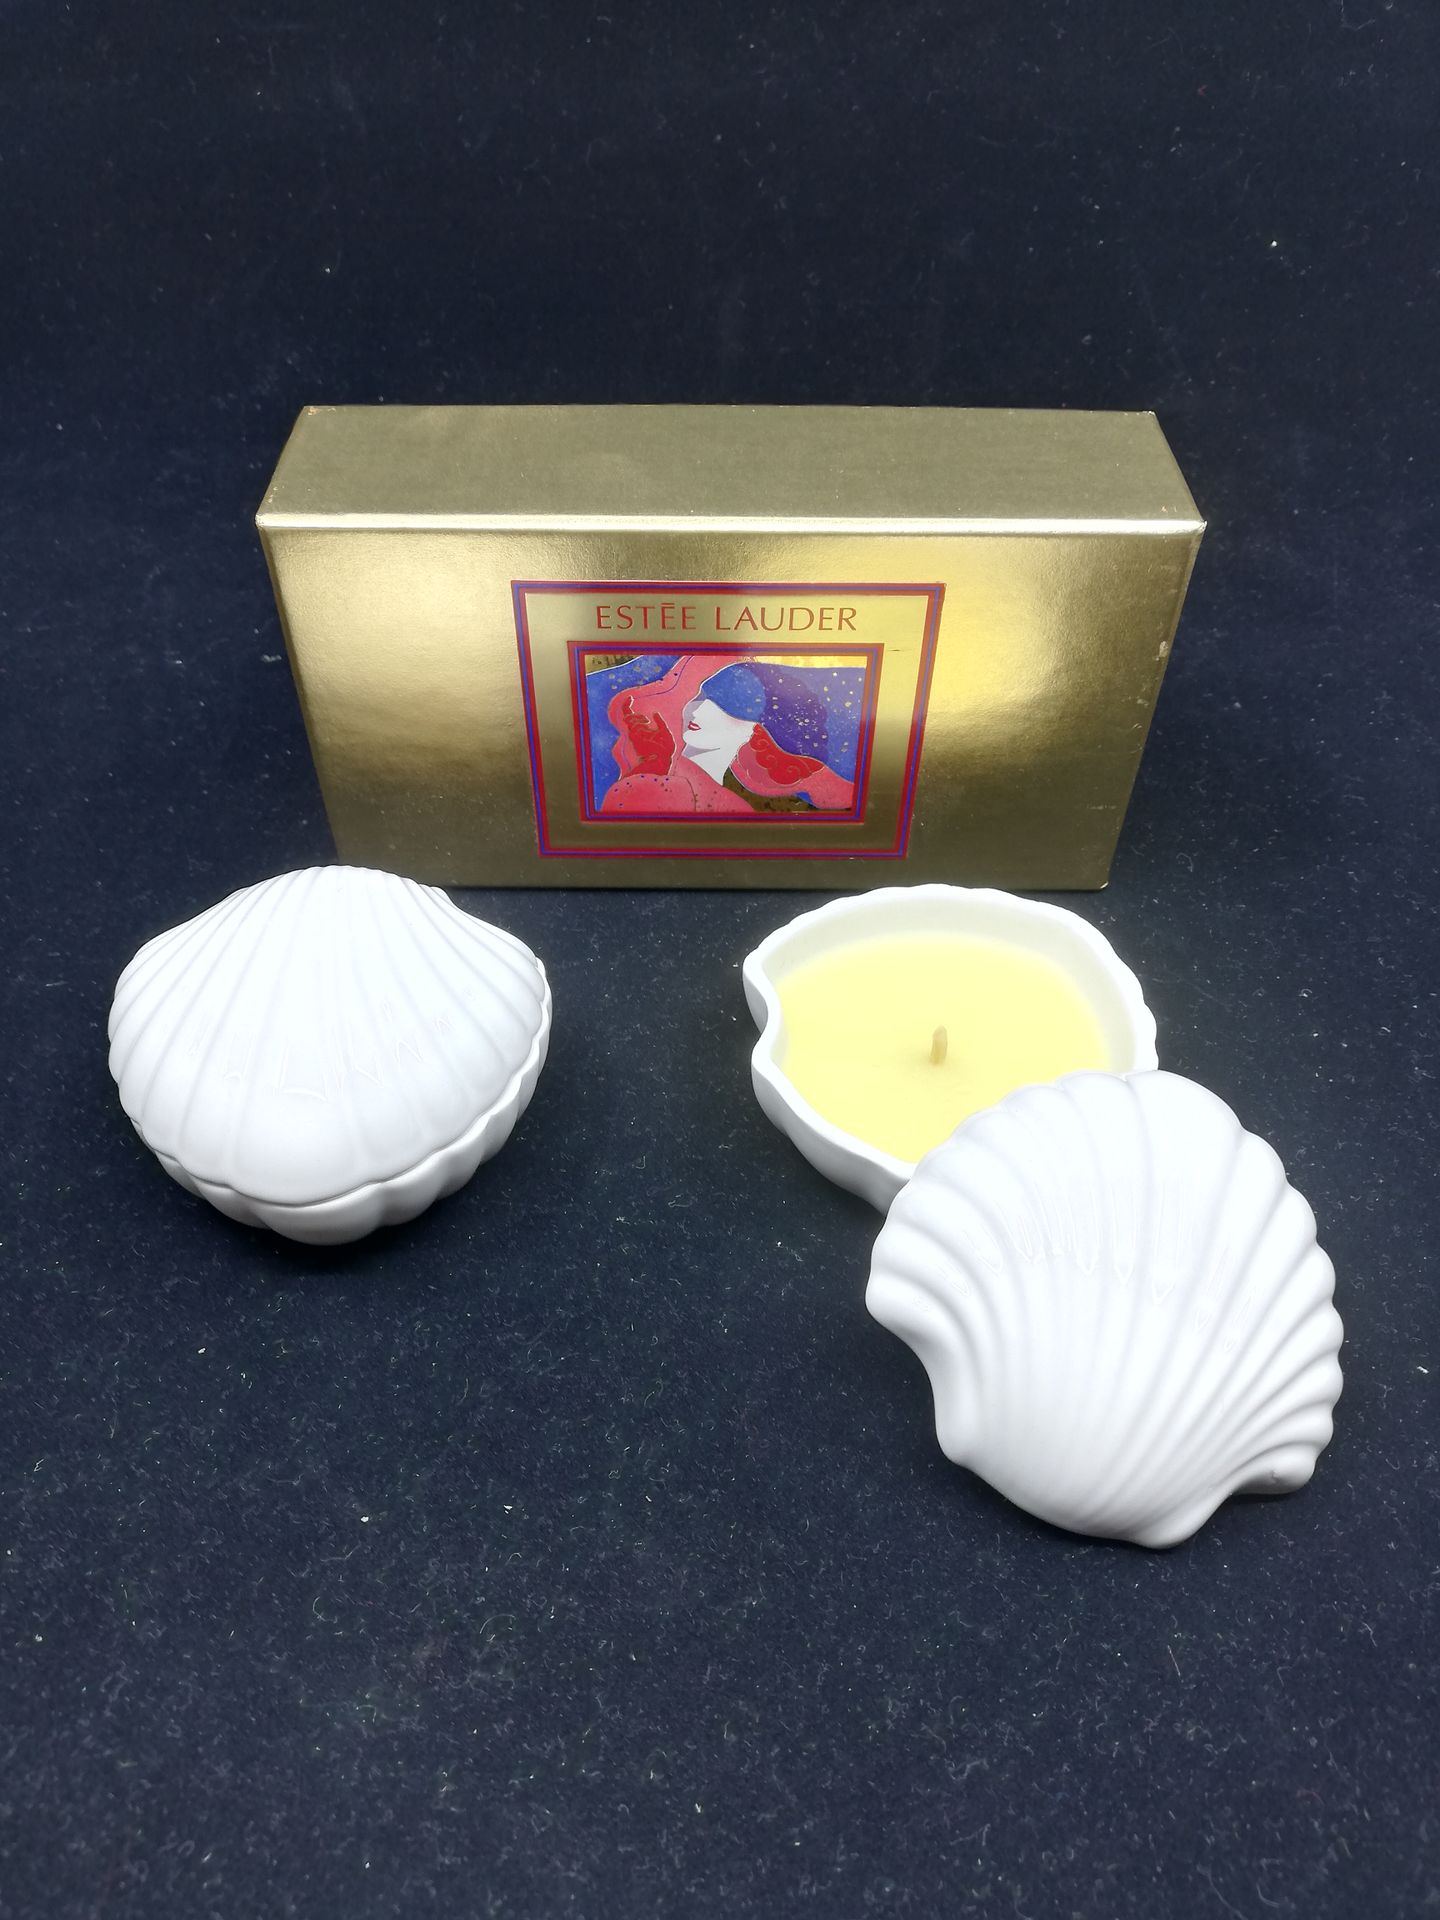 Null 雅诗兰黛 - (2000年代)

一个用金纸覆盖的纸板派对盒，上面有一个女人肖像的多色插图，里面有两根香薰蜡烛，用带贝壳的瓷器盒子装着。